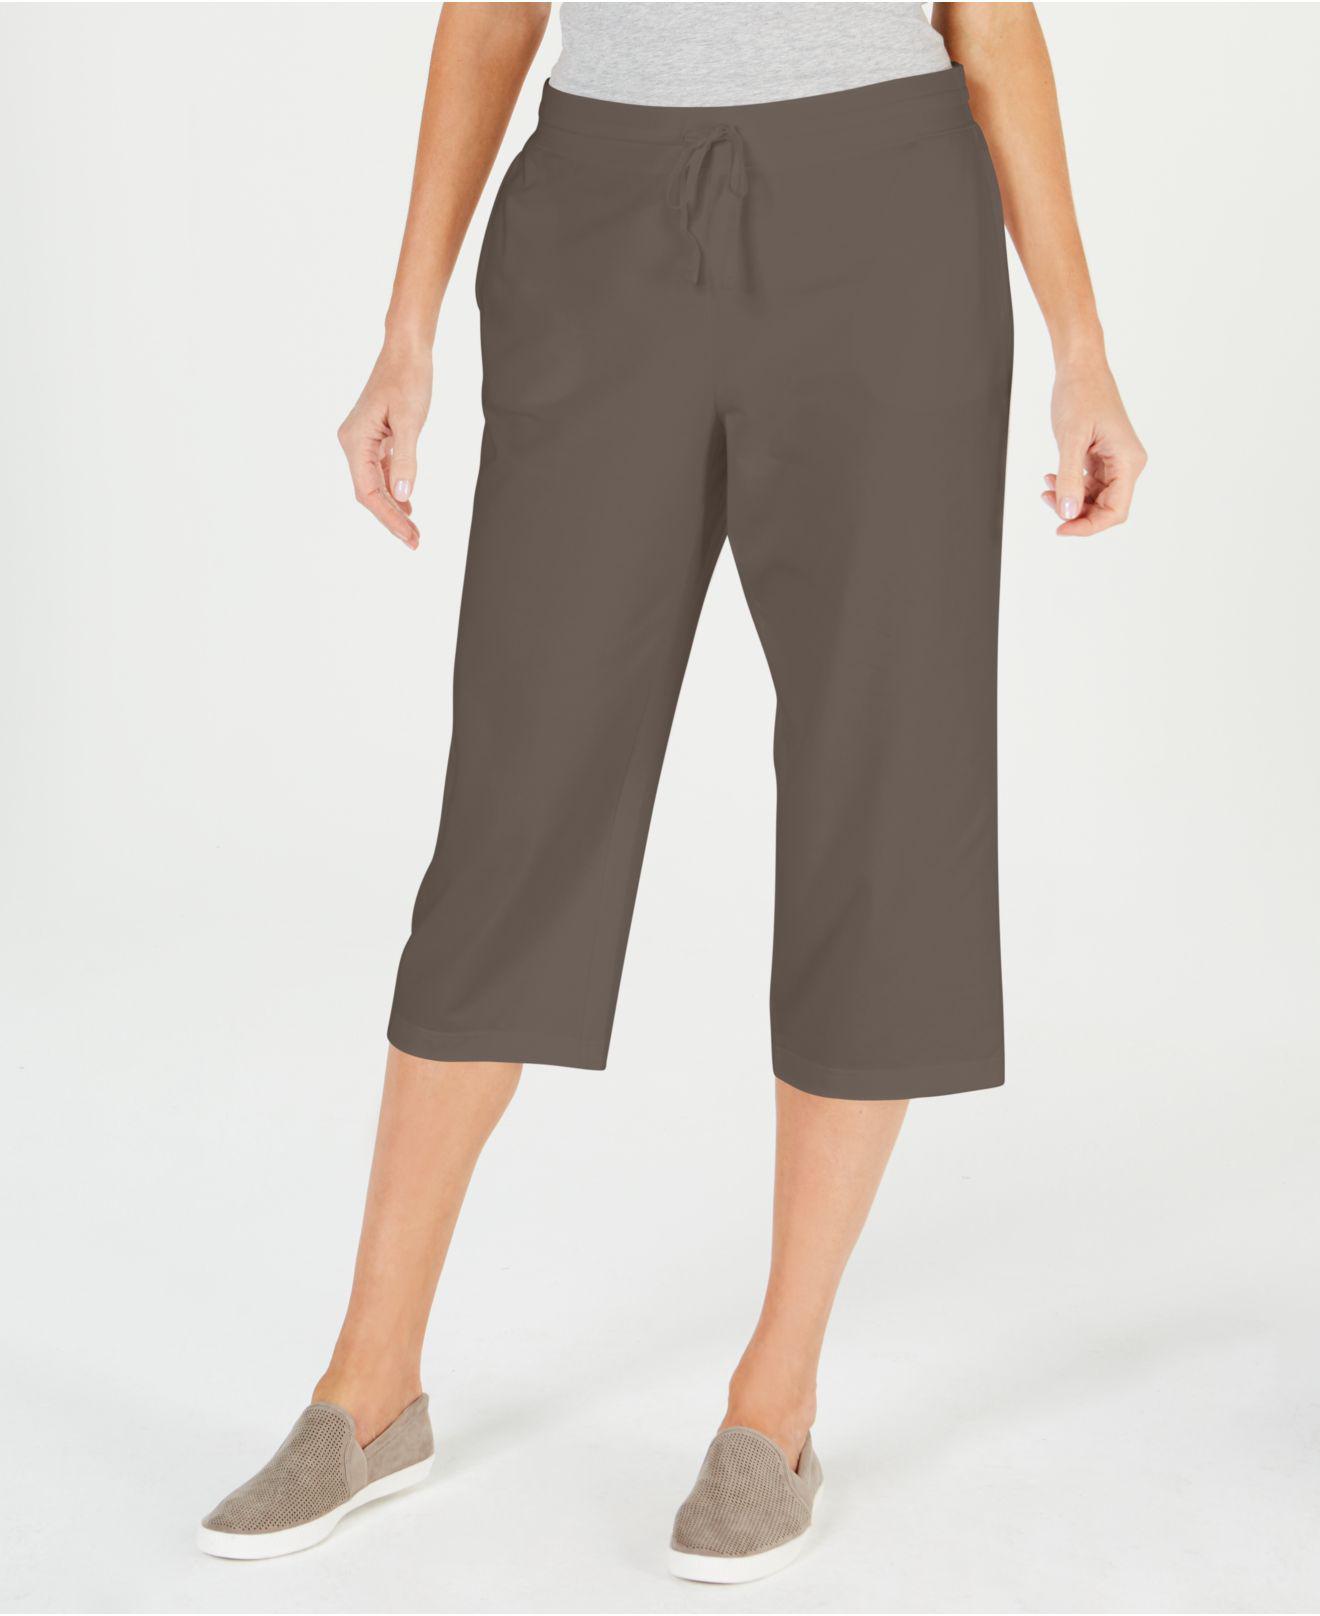 Lyst - Karen Scott Knit Drawstring Capri Pants, Created For Macy's in Brown